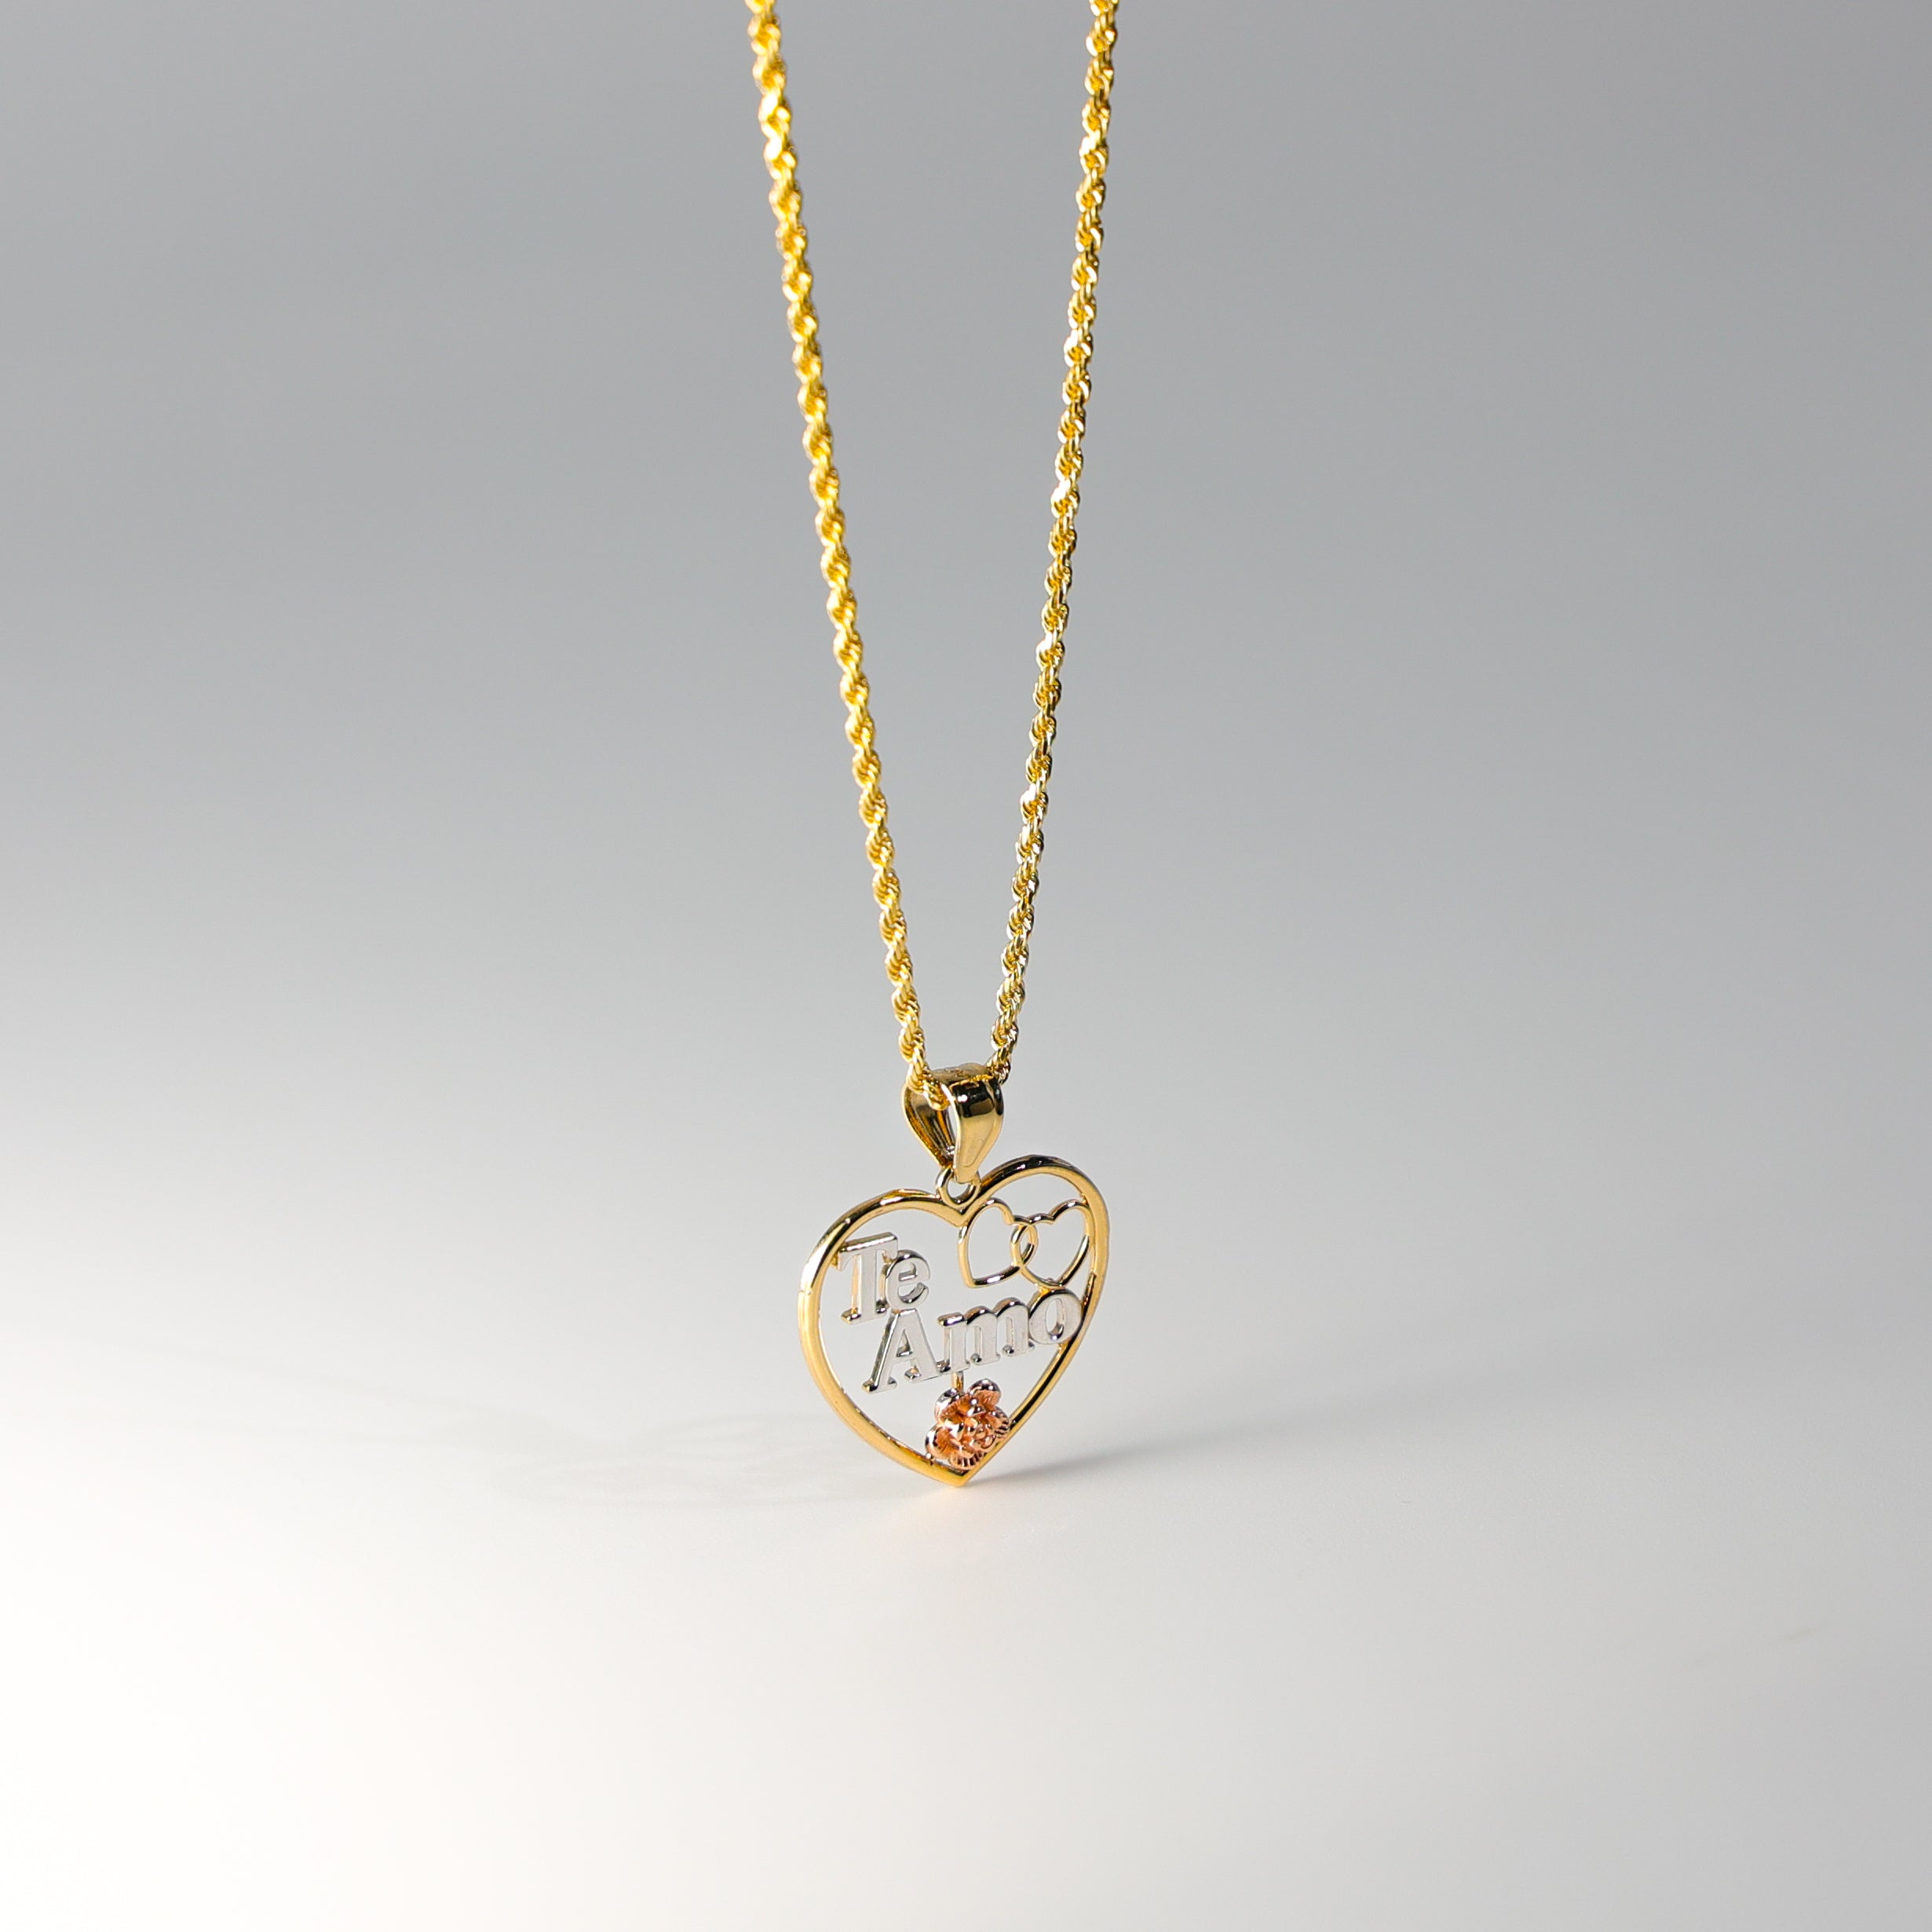 Gold Te Amo Heart 2 Piece Pendant Model-2378 - Charlie & Co. Jewelry